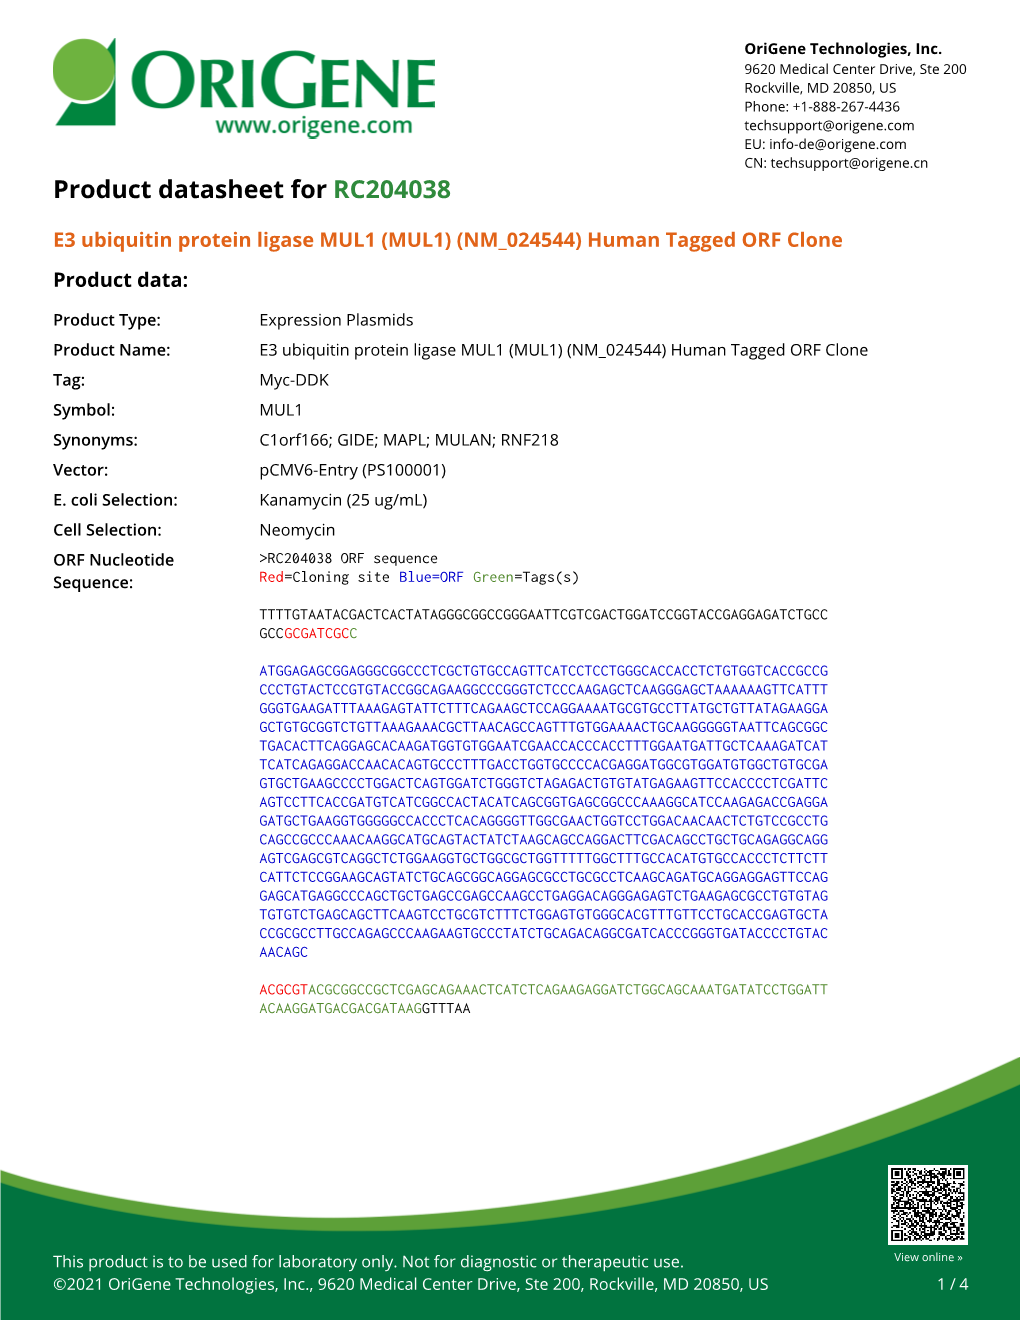 E3 Ubiquitin Protein Ligase MUL1 (MUL1) (NM 024544) Human Tagged ORF Clone Product Data